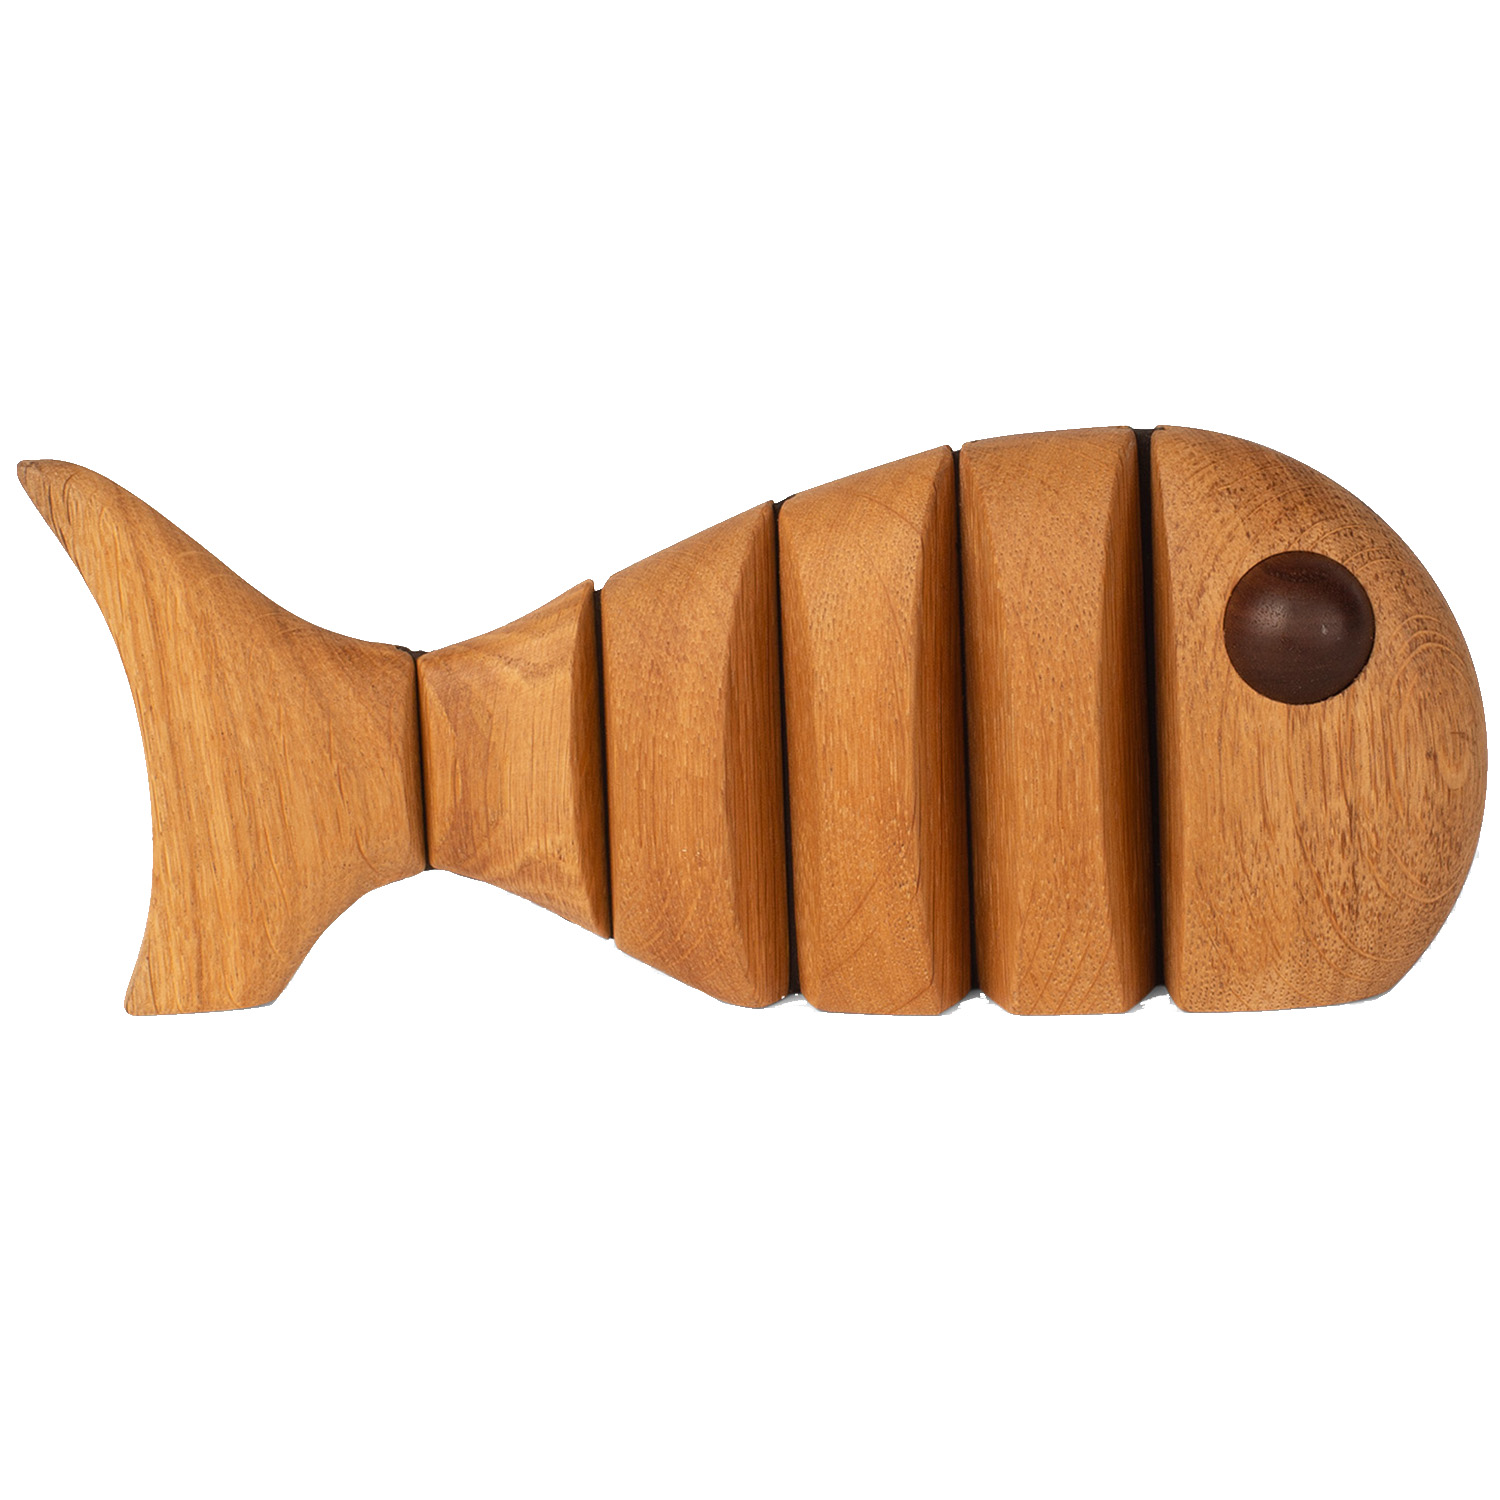 The Wood Fish Wooden Figurine 18 cm - Spring Copenhagen @ RoyalDesign